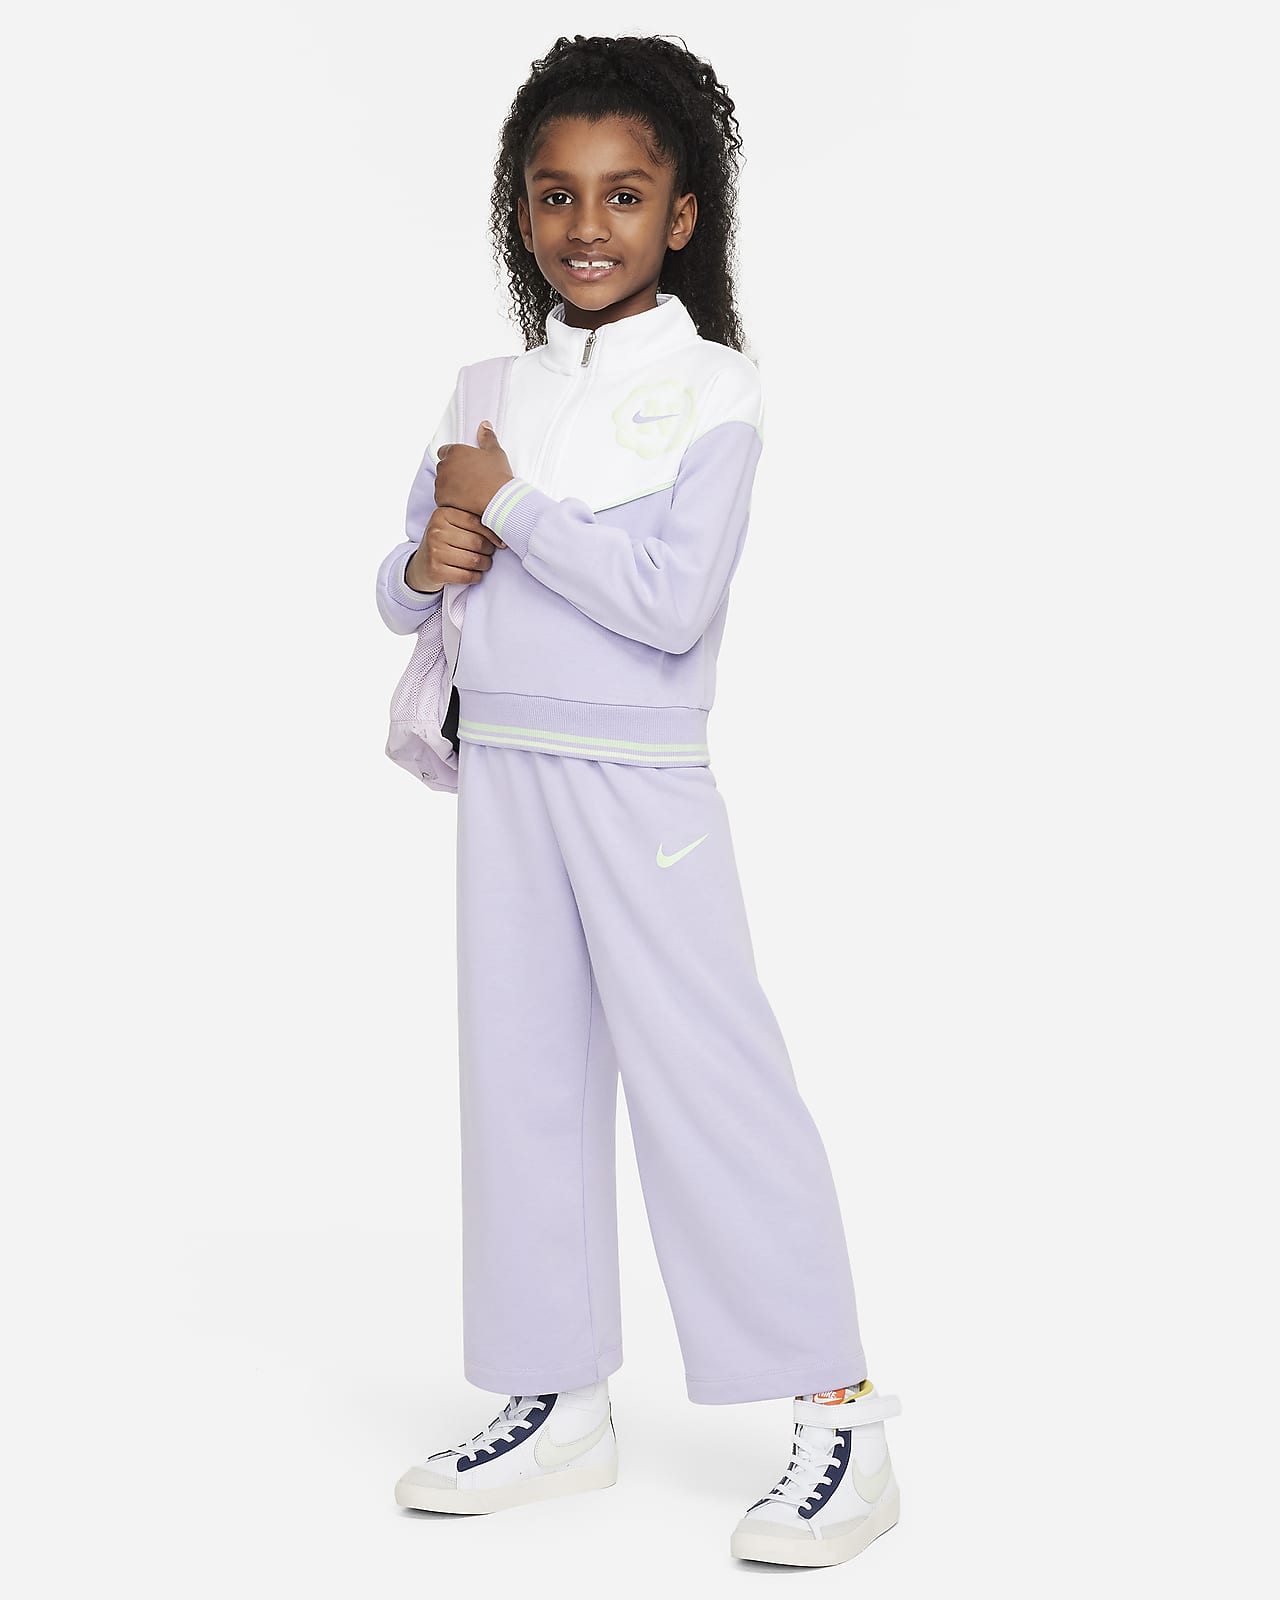 Nike Prep in Your Step Little Kids' Half-Zip Set